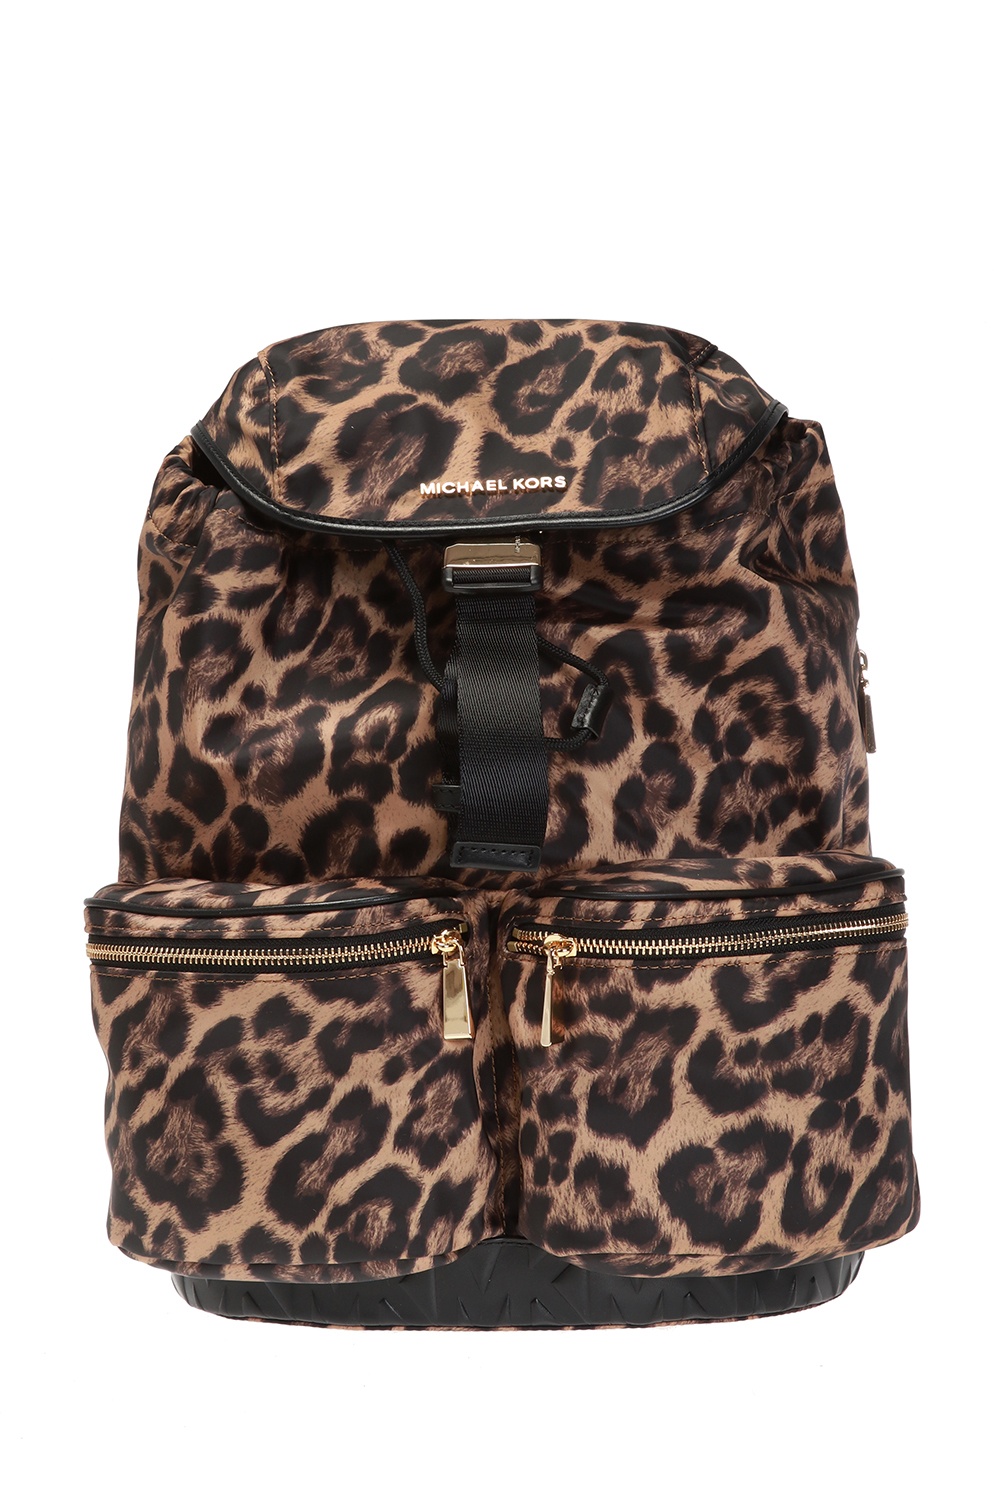 michael kors leopard backpack